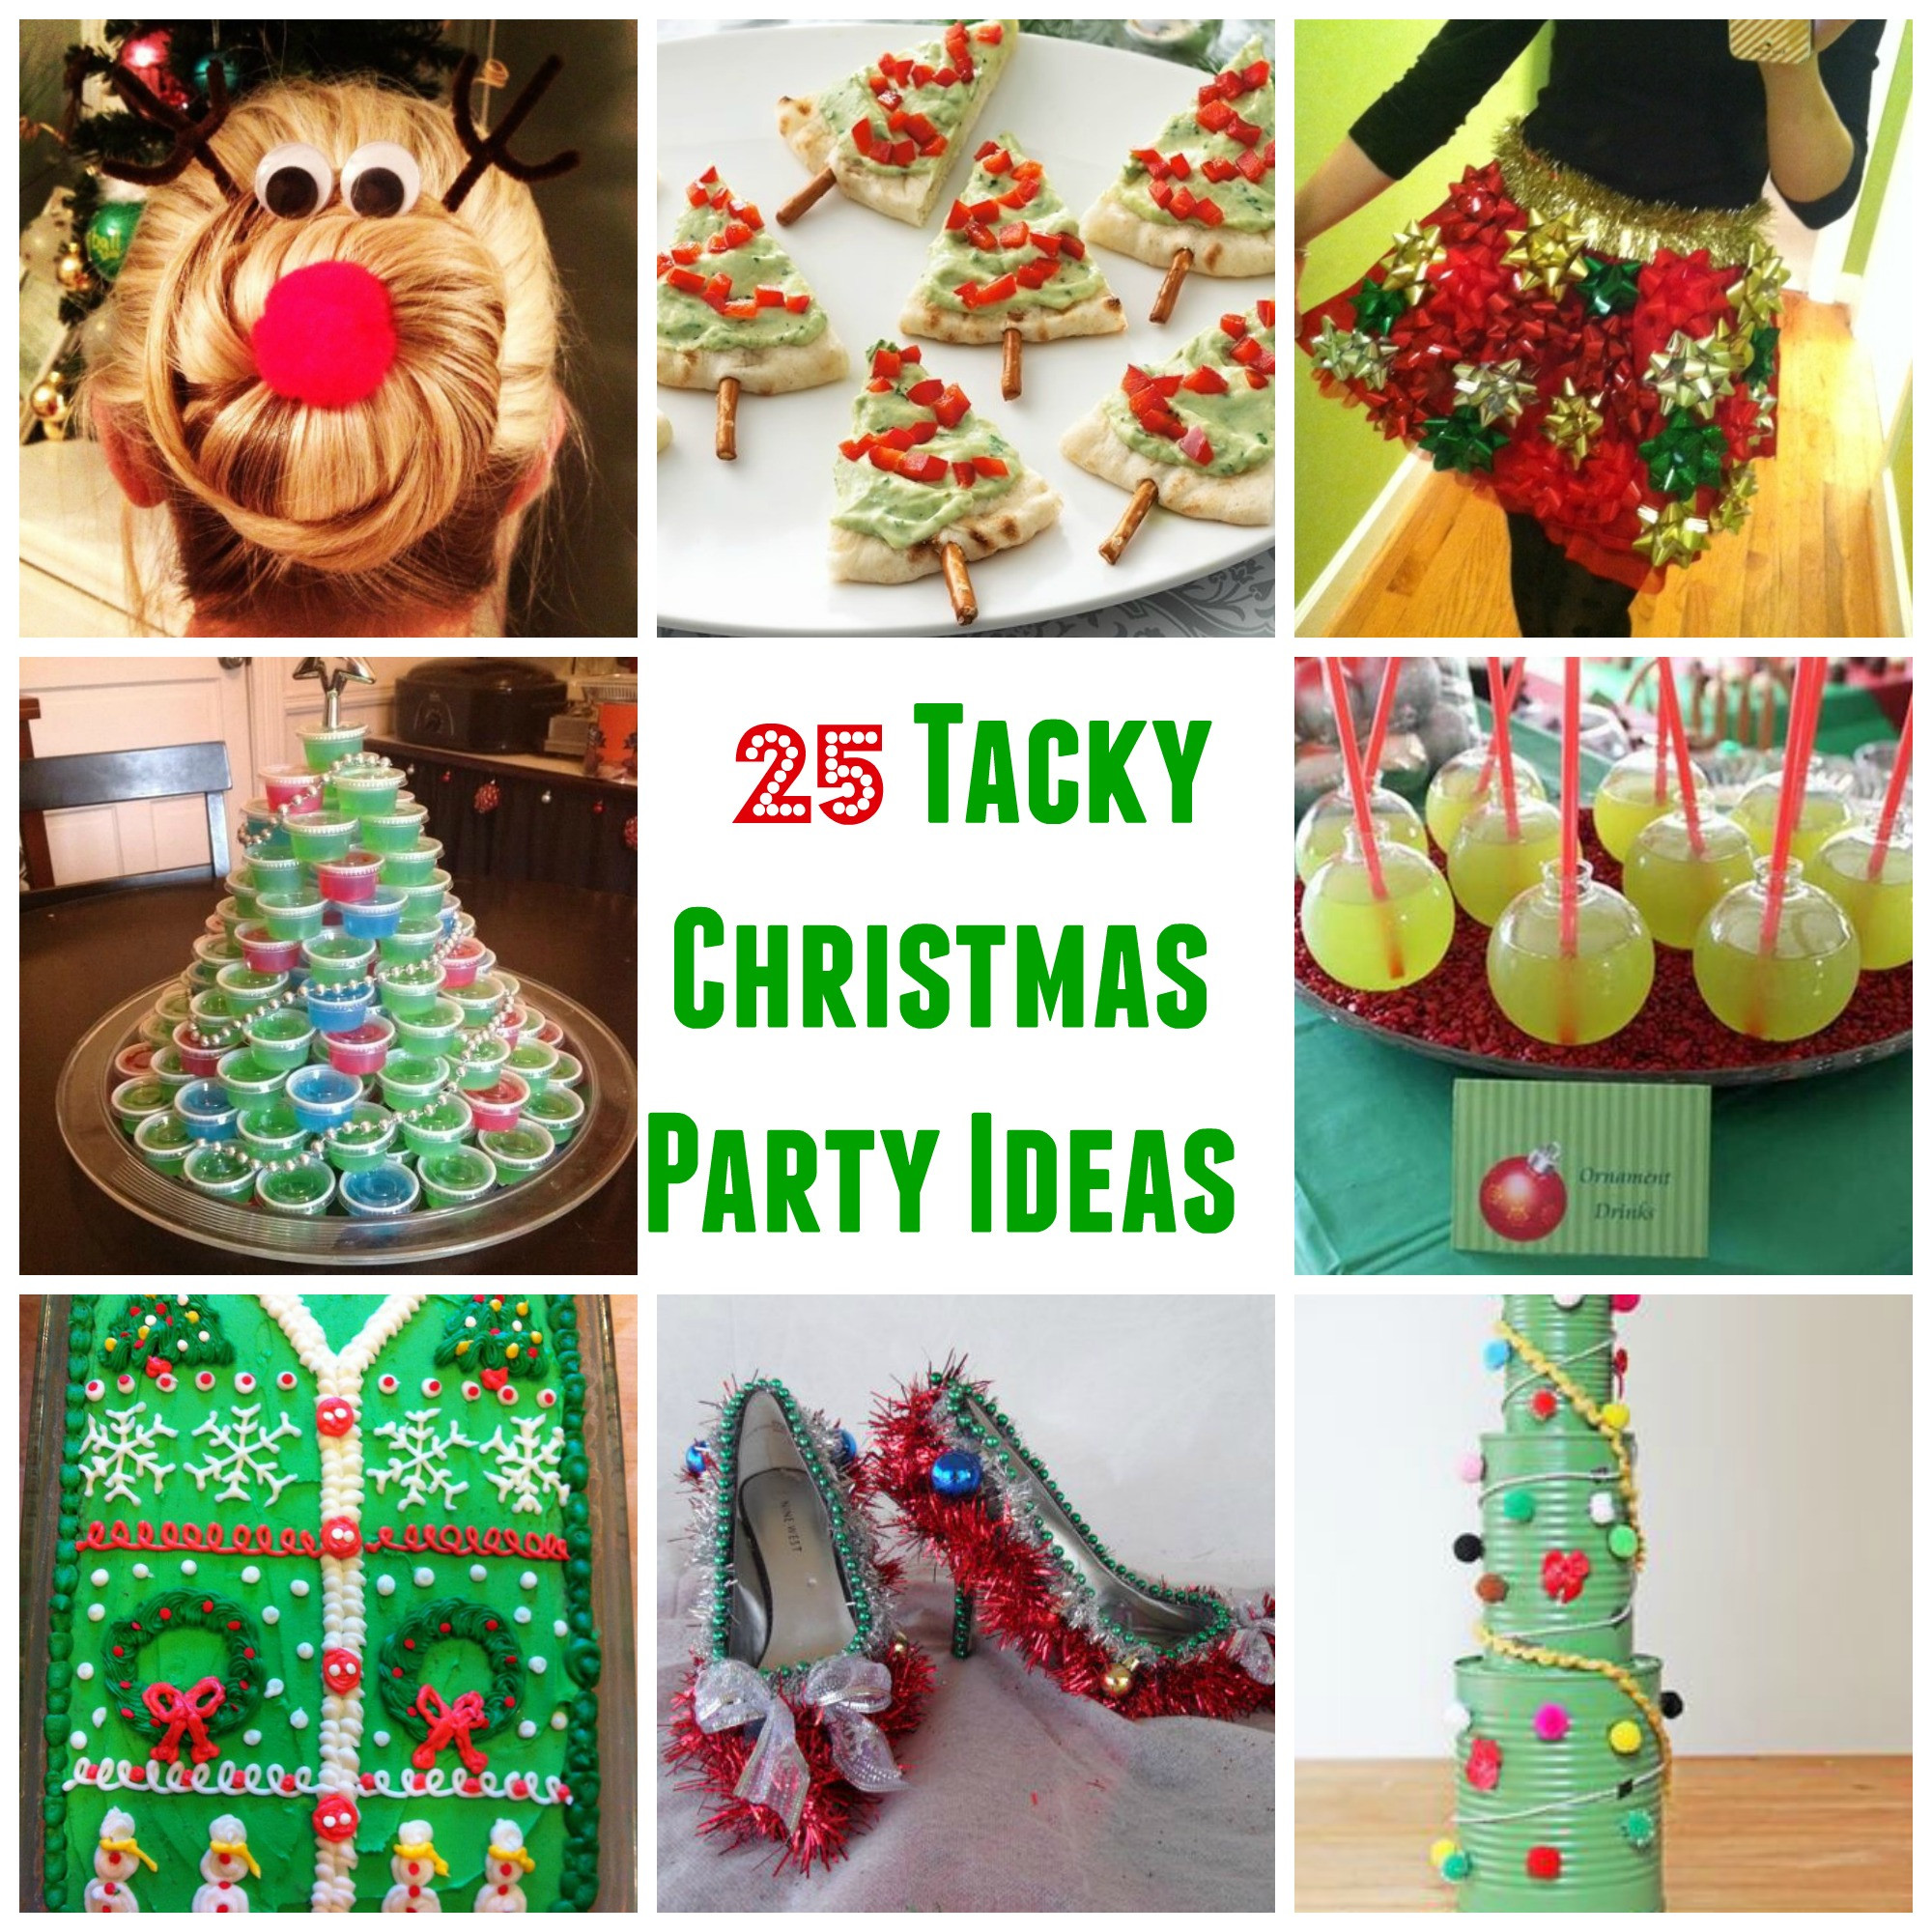 Tacky Christmas Party Ideas
 25 Genius Tacky Christmas Party Ideas Sarah Scoop